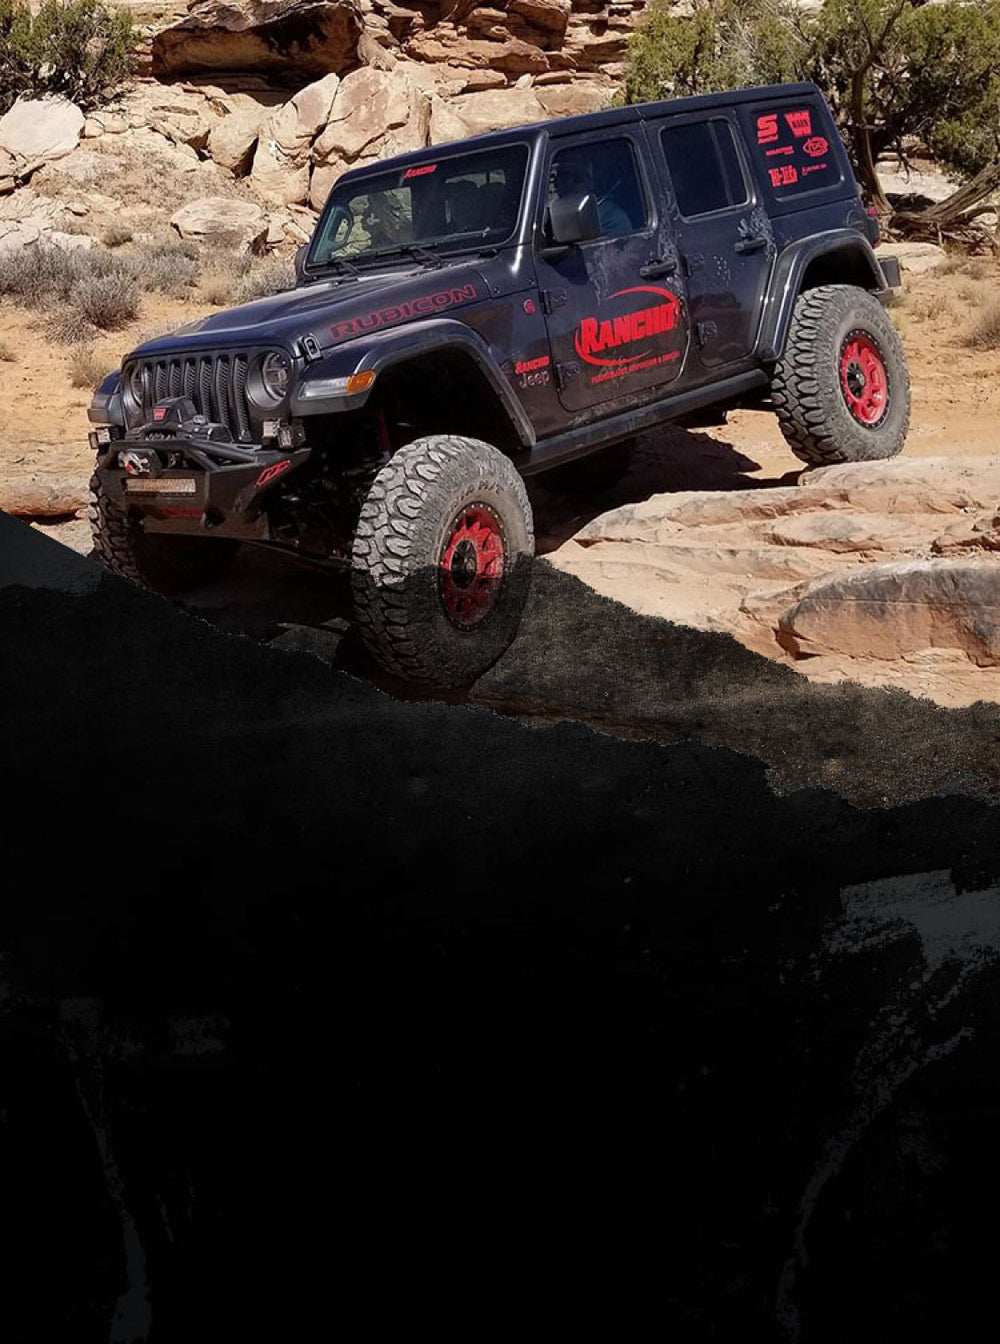 Rancho jeep driving on rocks